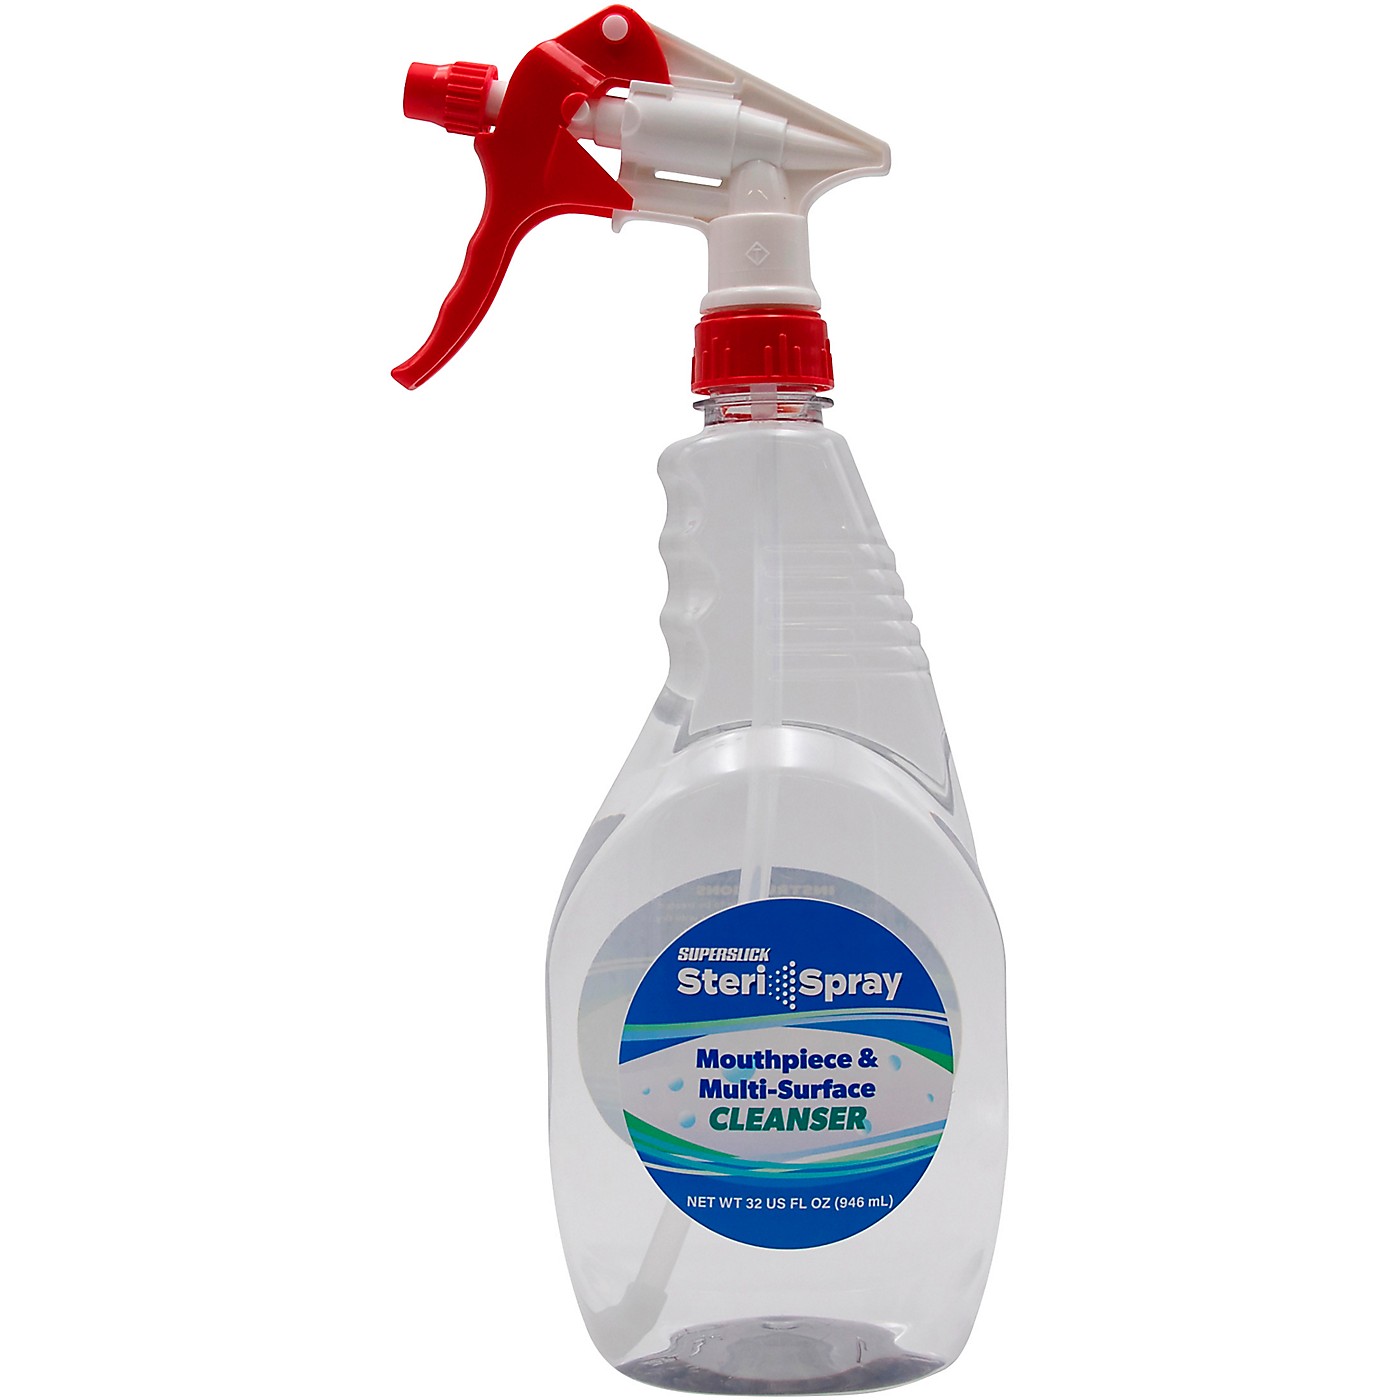 Superslick Steri-Spray Mouthpiece & Multi-Surface Cleanser, 32 oz. Spray Bottle thumbnail